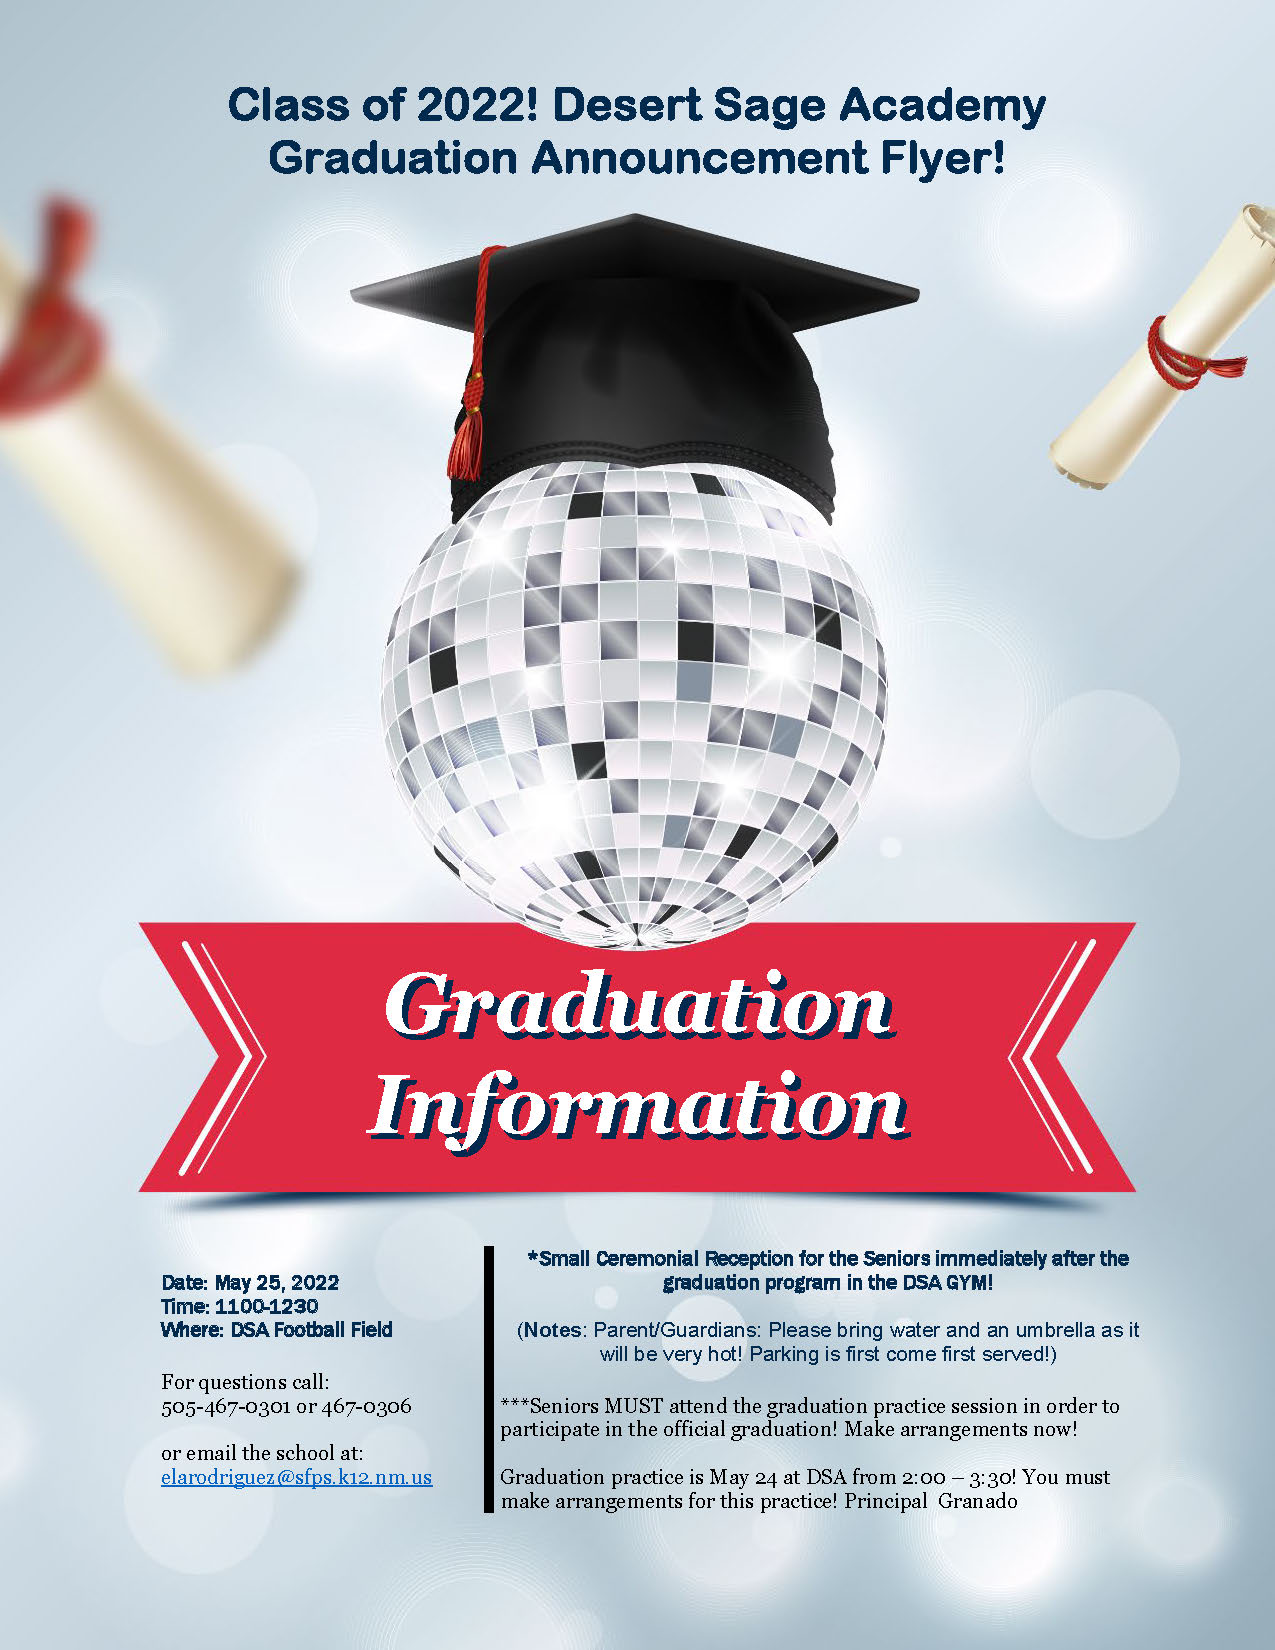 Desert Sage Graduation Information Flyer